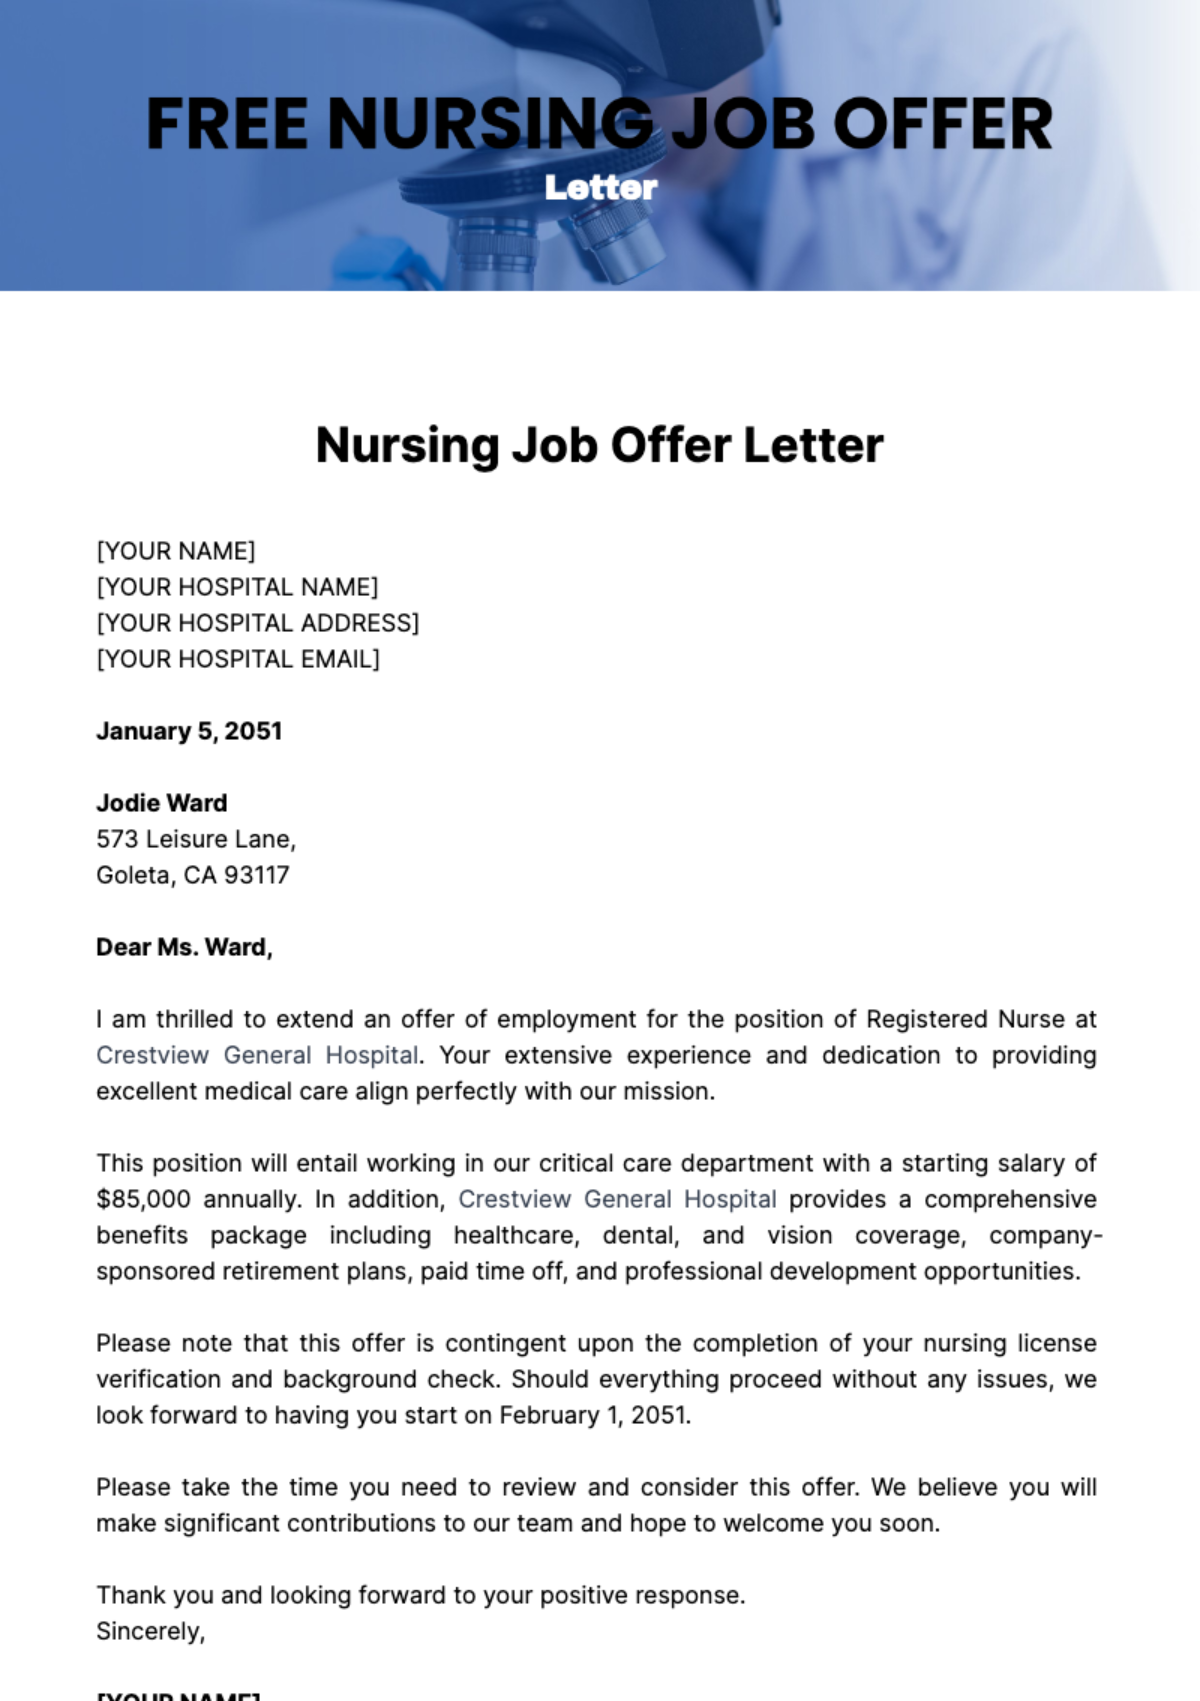 Free Nursing Job Offer Letter Template